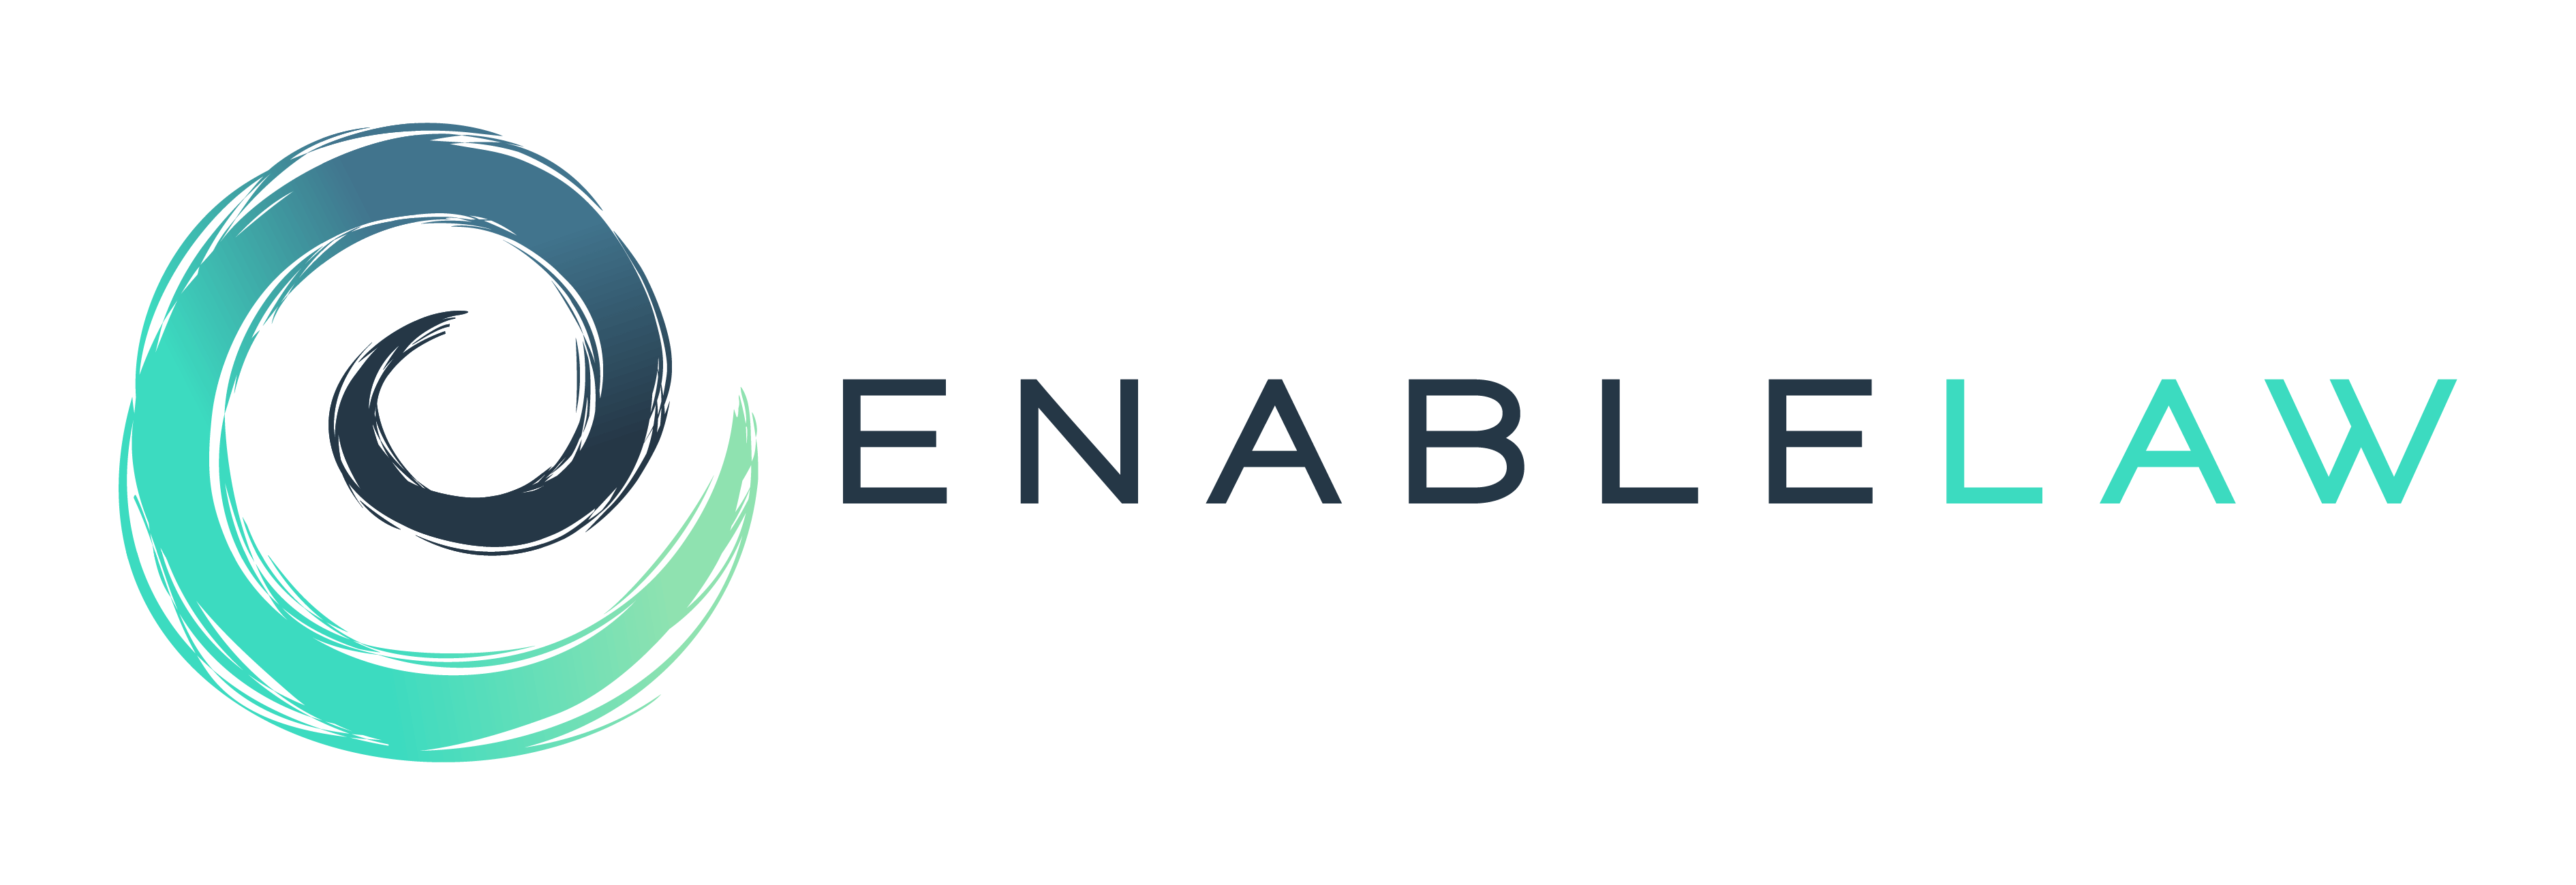 Enable Law logo